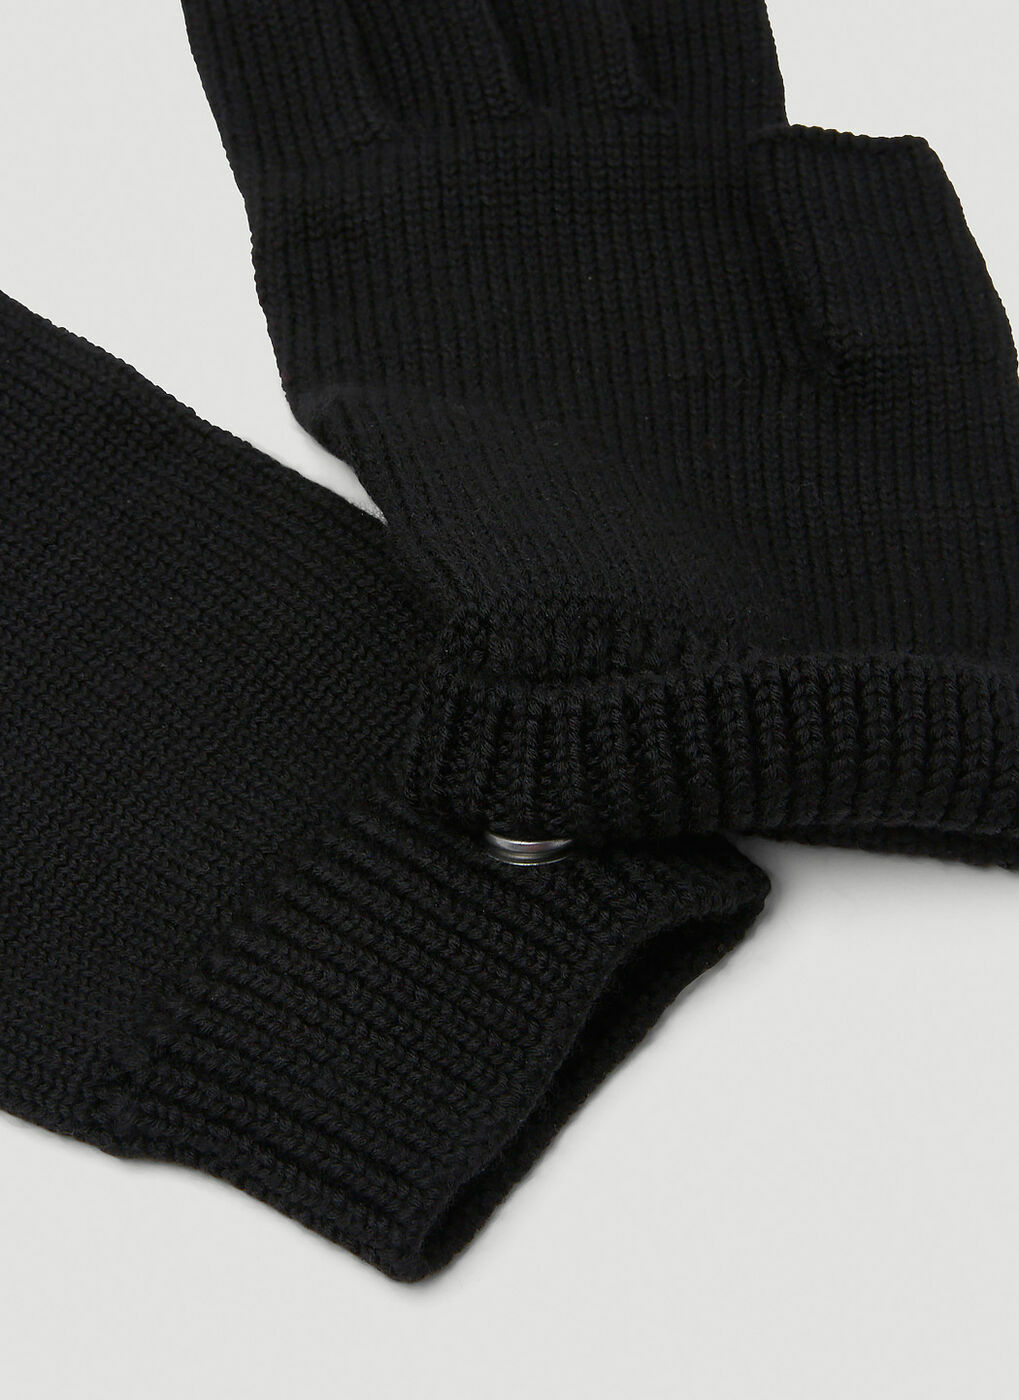 Touchscreen Gloves in Black